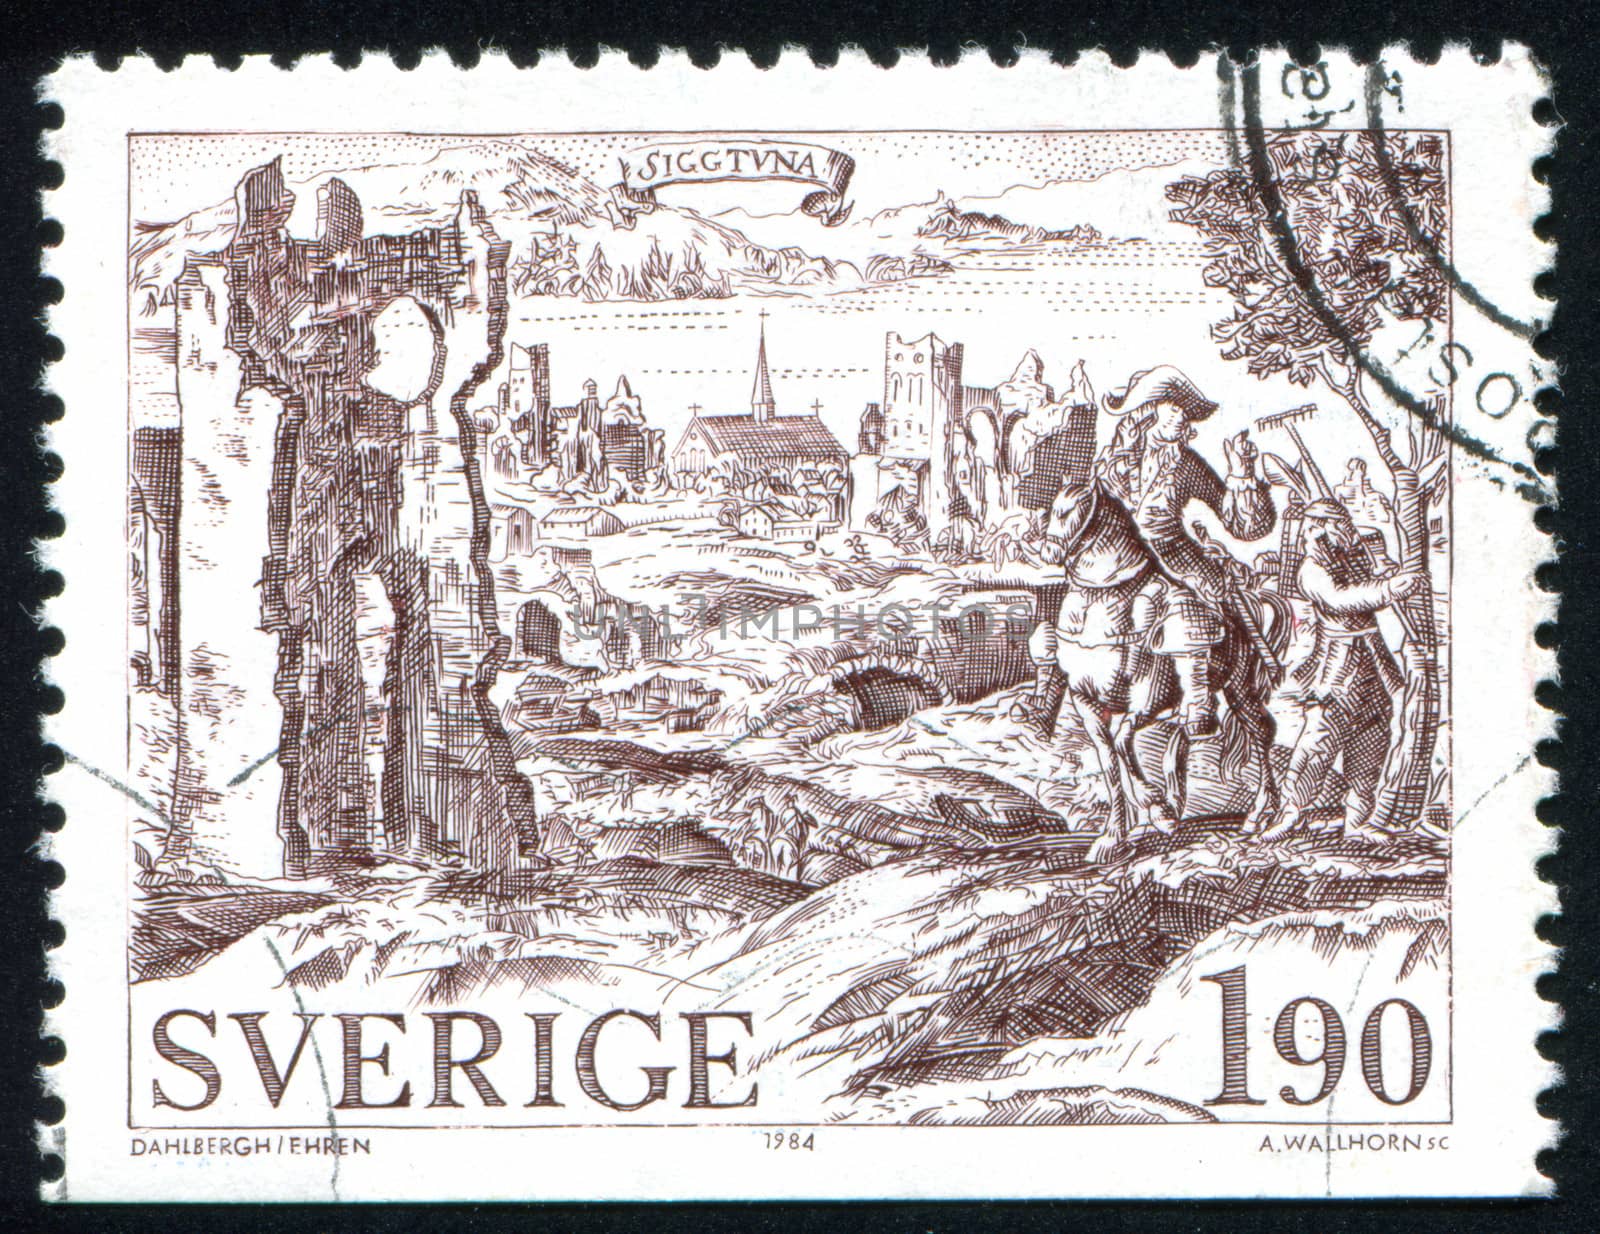 SWEDEN - CIRCA 1984: stamp printed by Sweden, shows Sigtuna, circa 1984